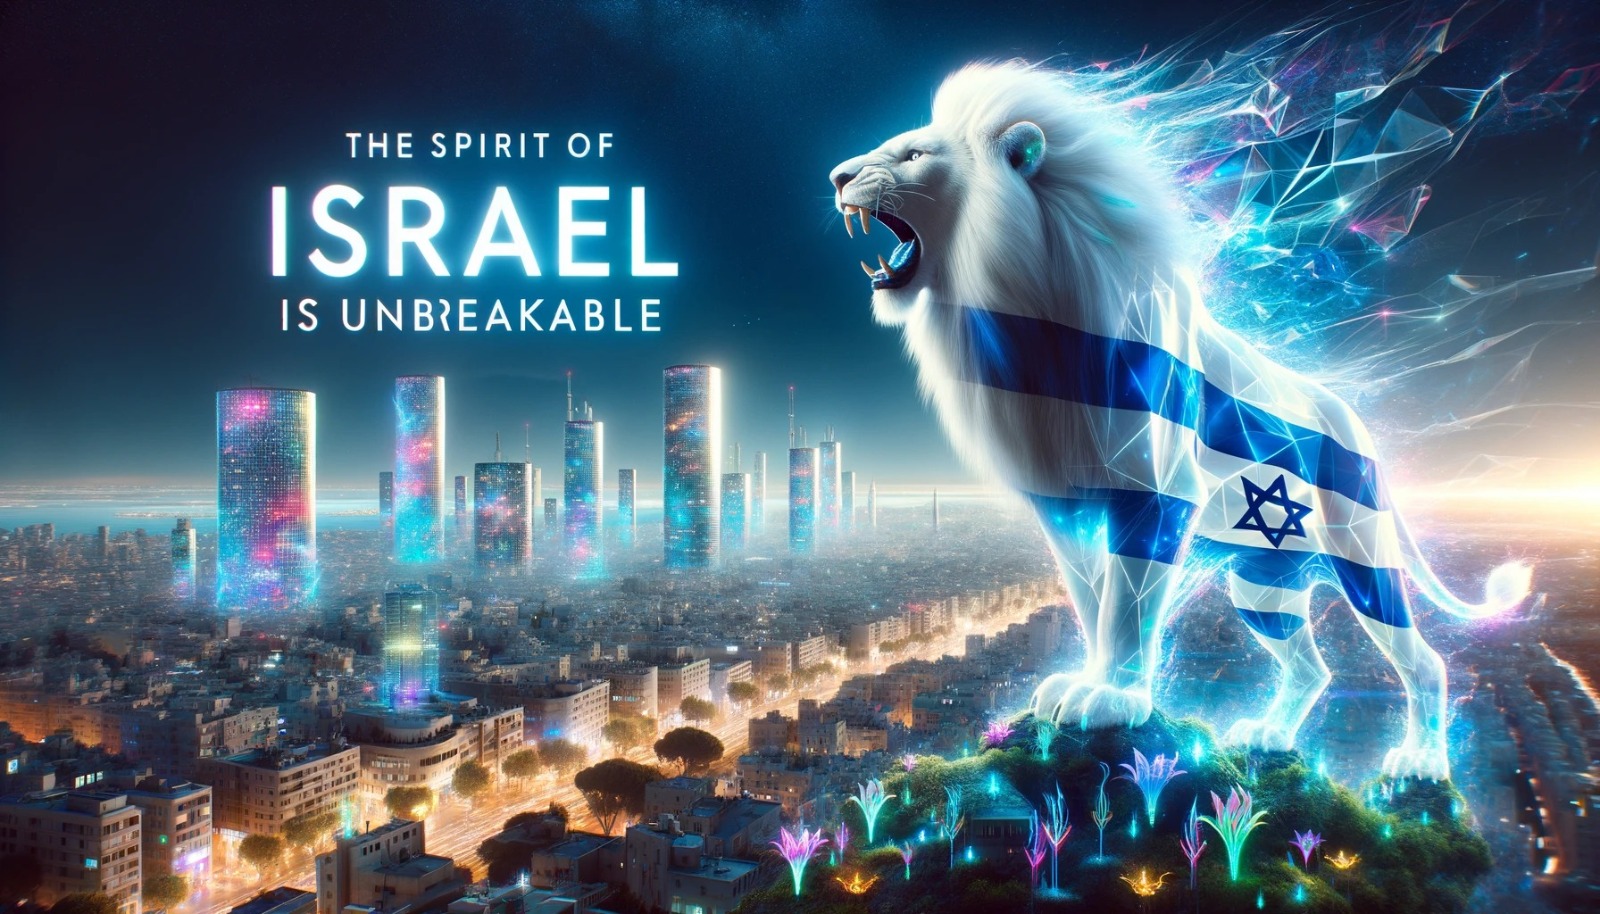 The Spirit of Israel is Unbreakable